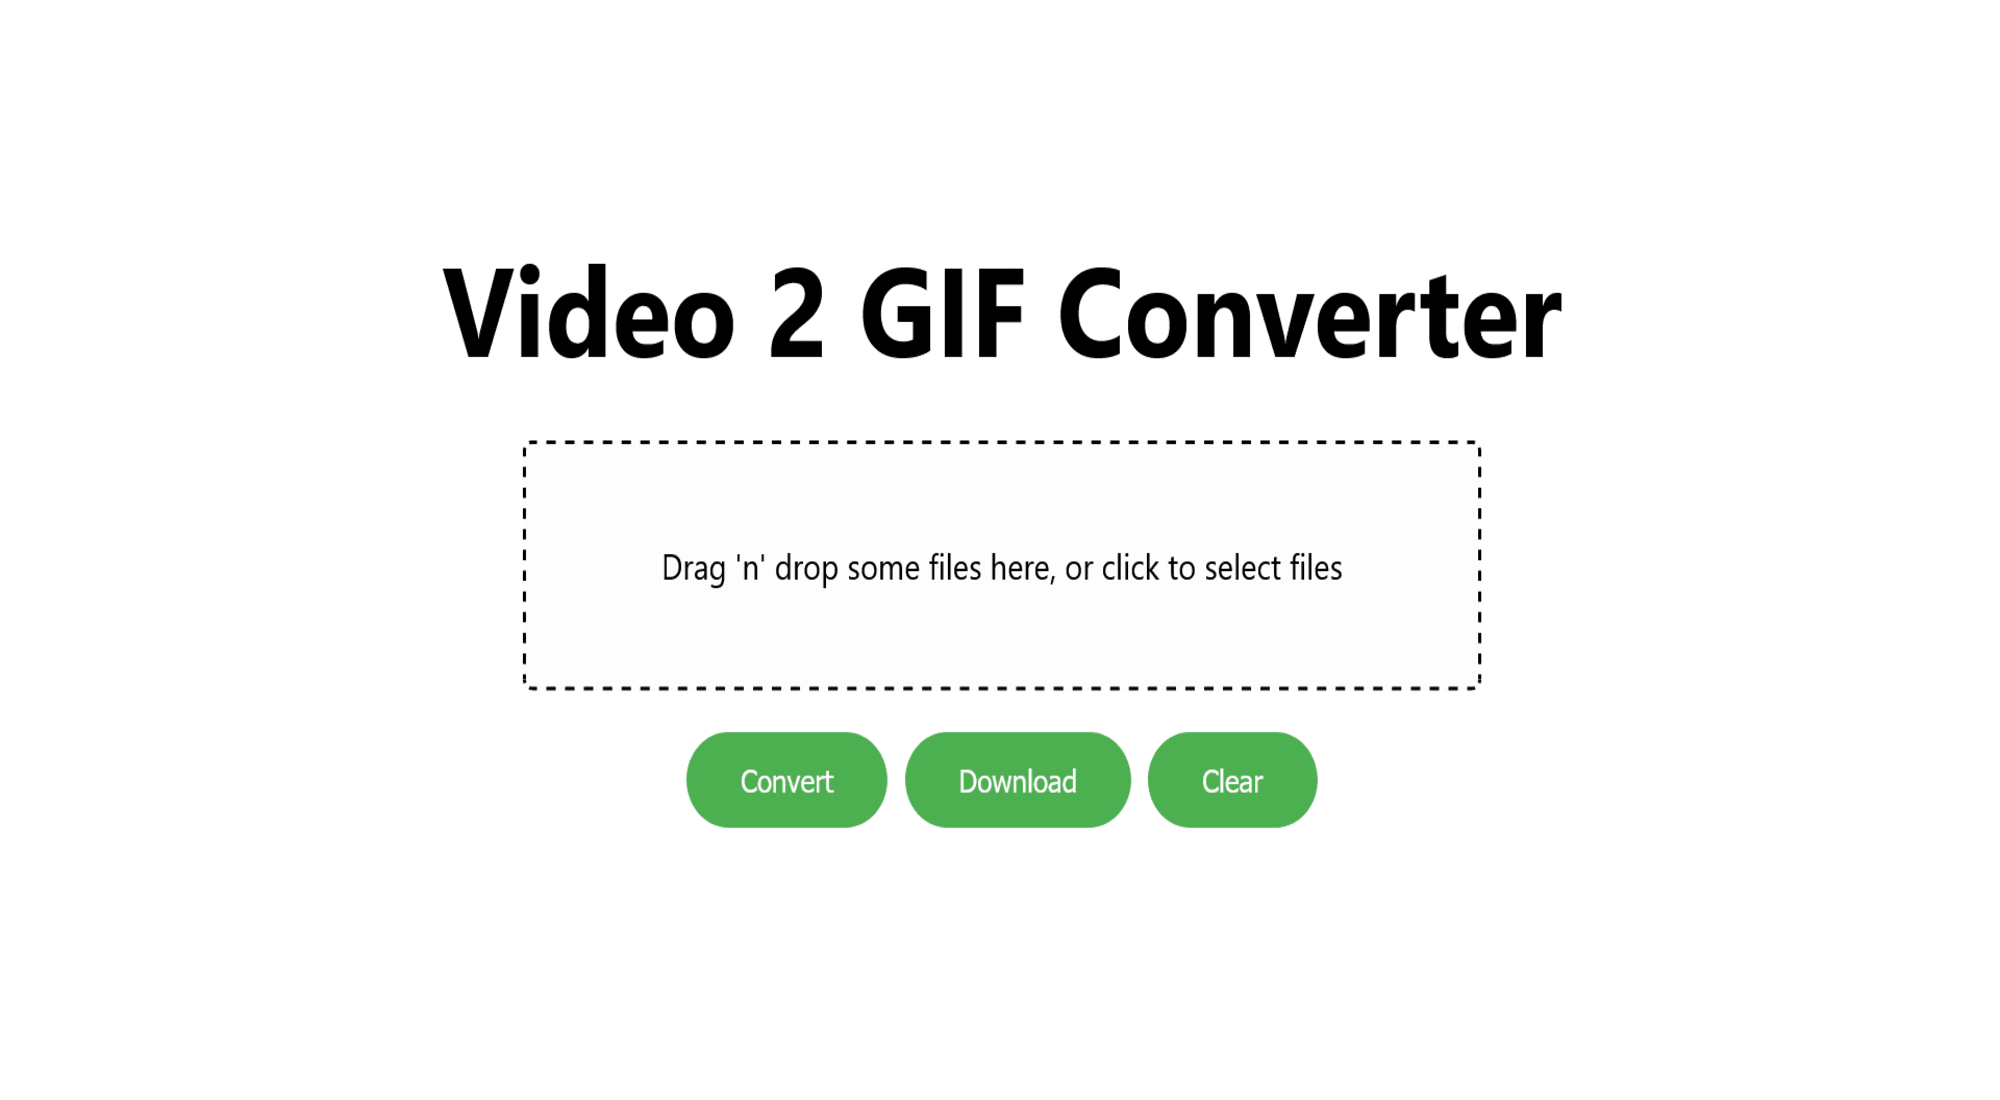 Converting GIF to MP4 - DEV Community